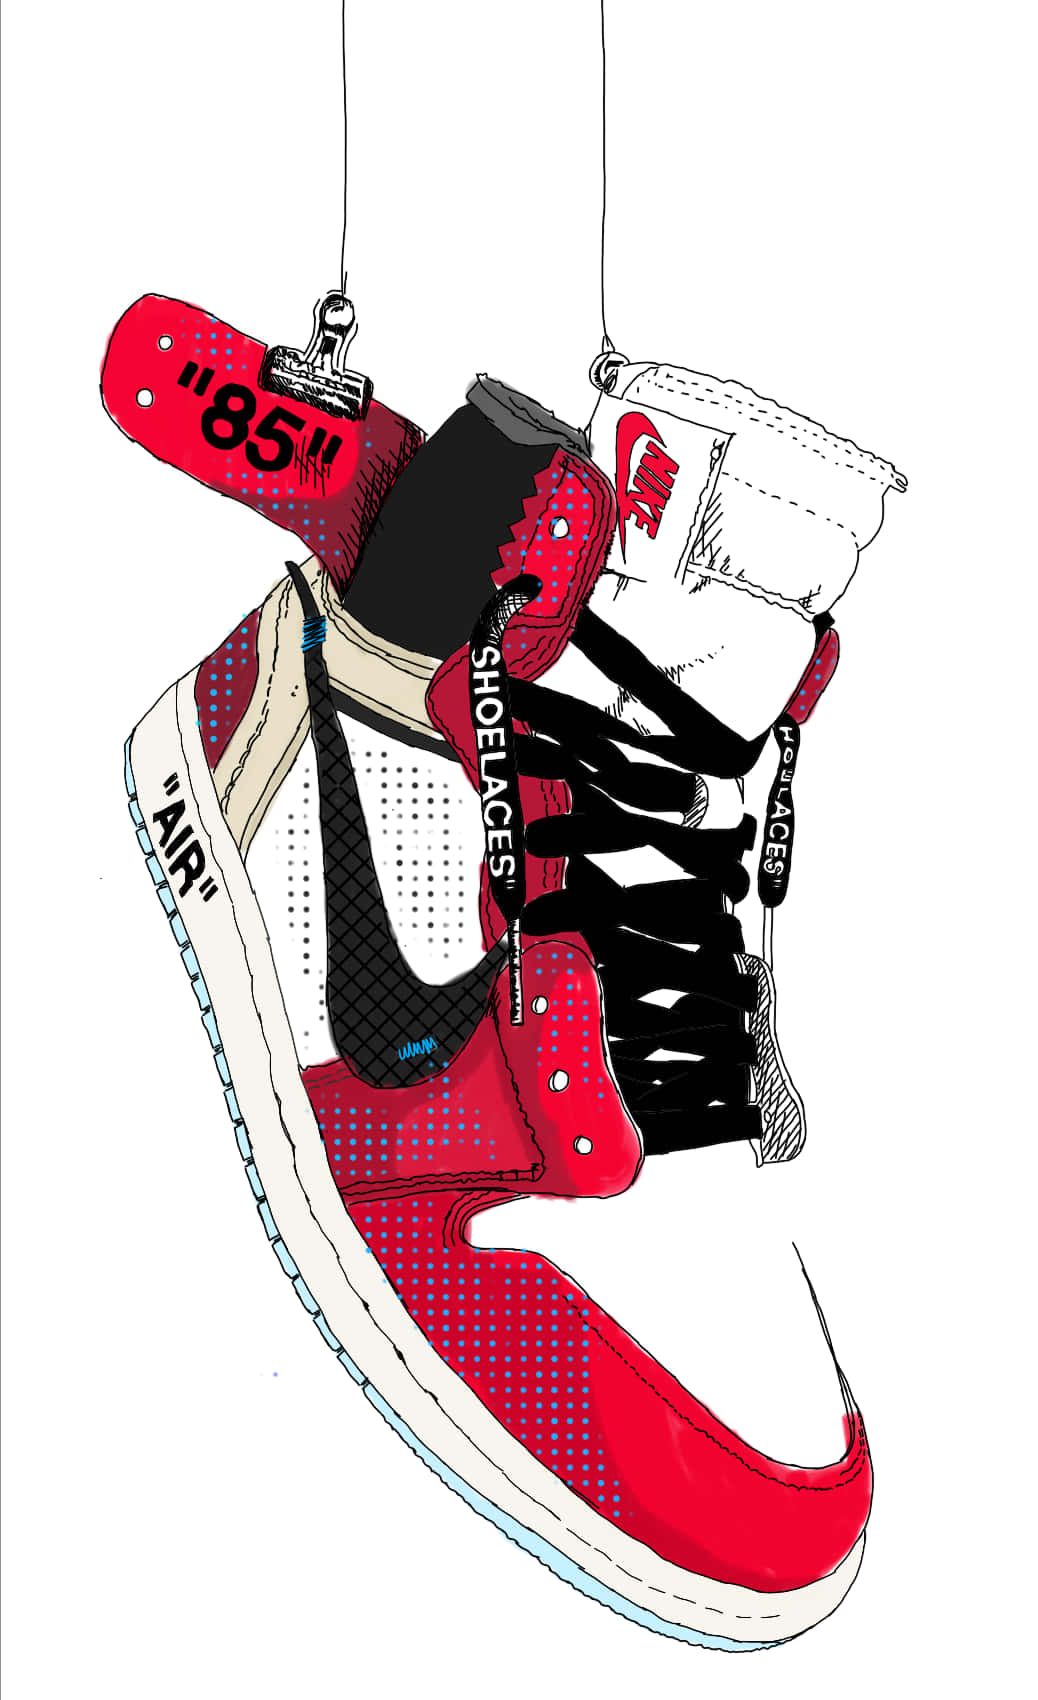 "The Iconic Nike Air Jordan - Breaking Barriers In Style" Wallpaper